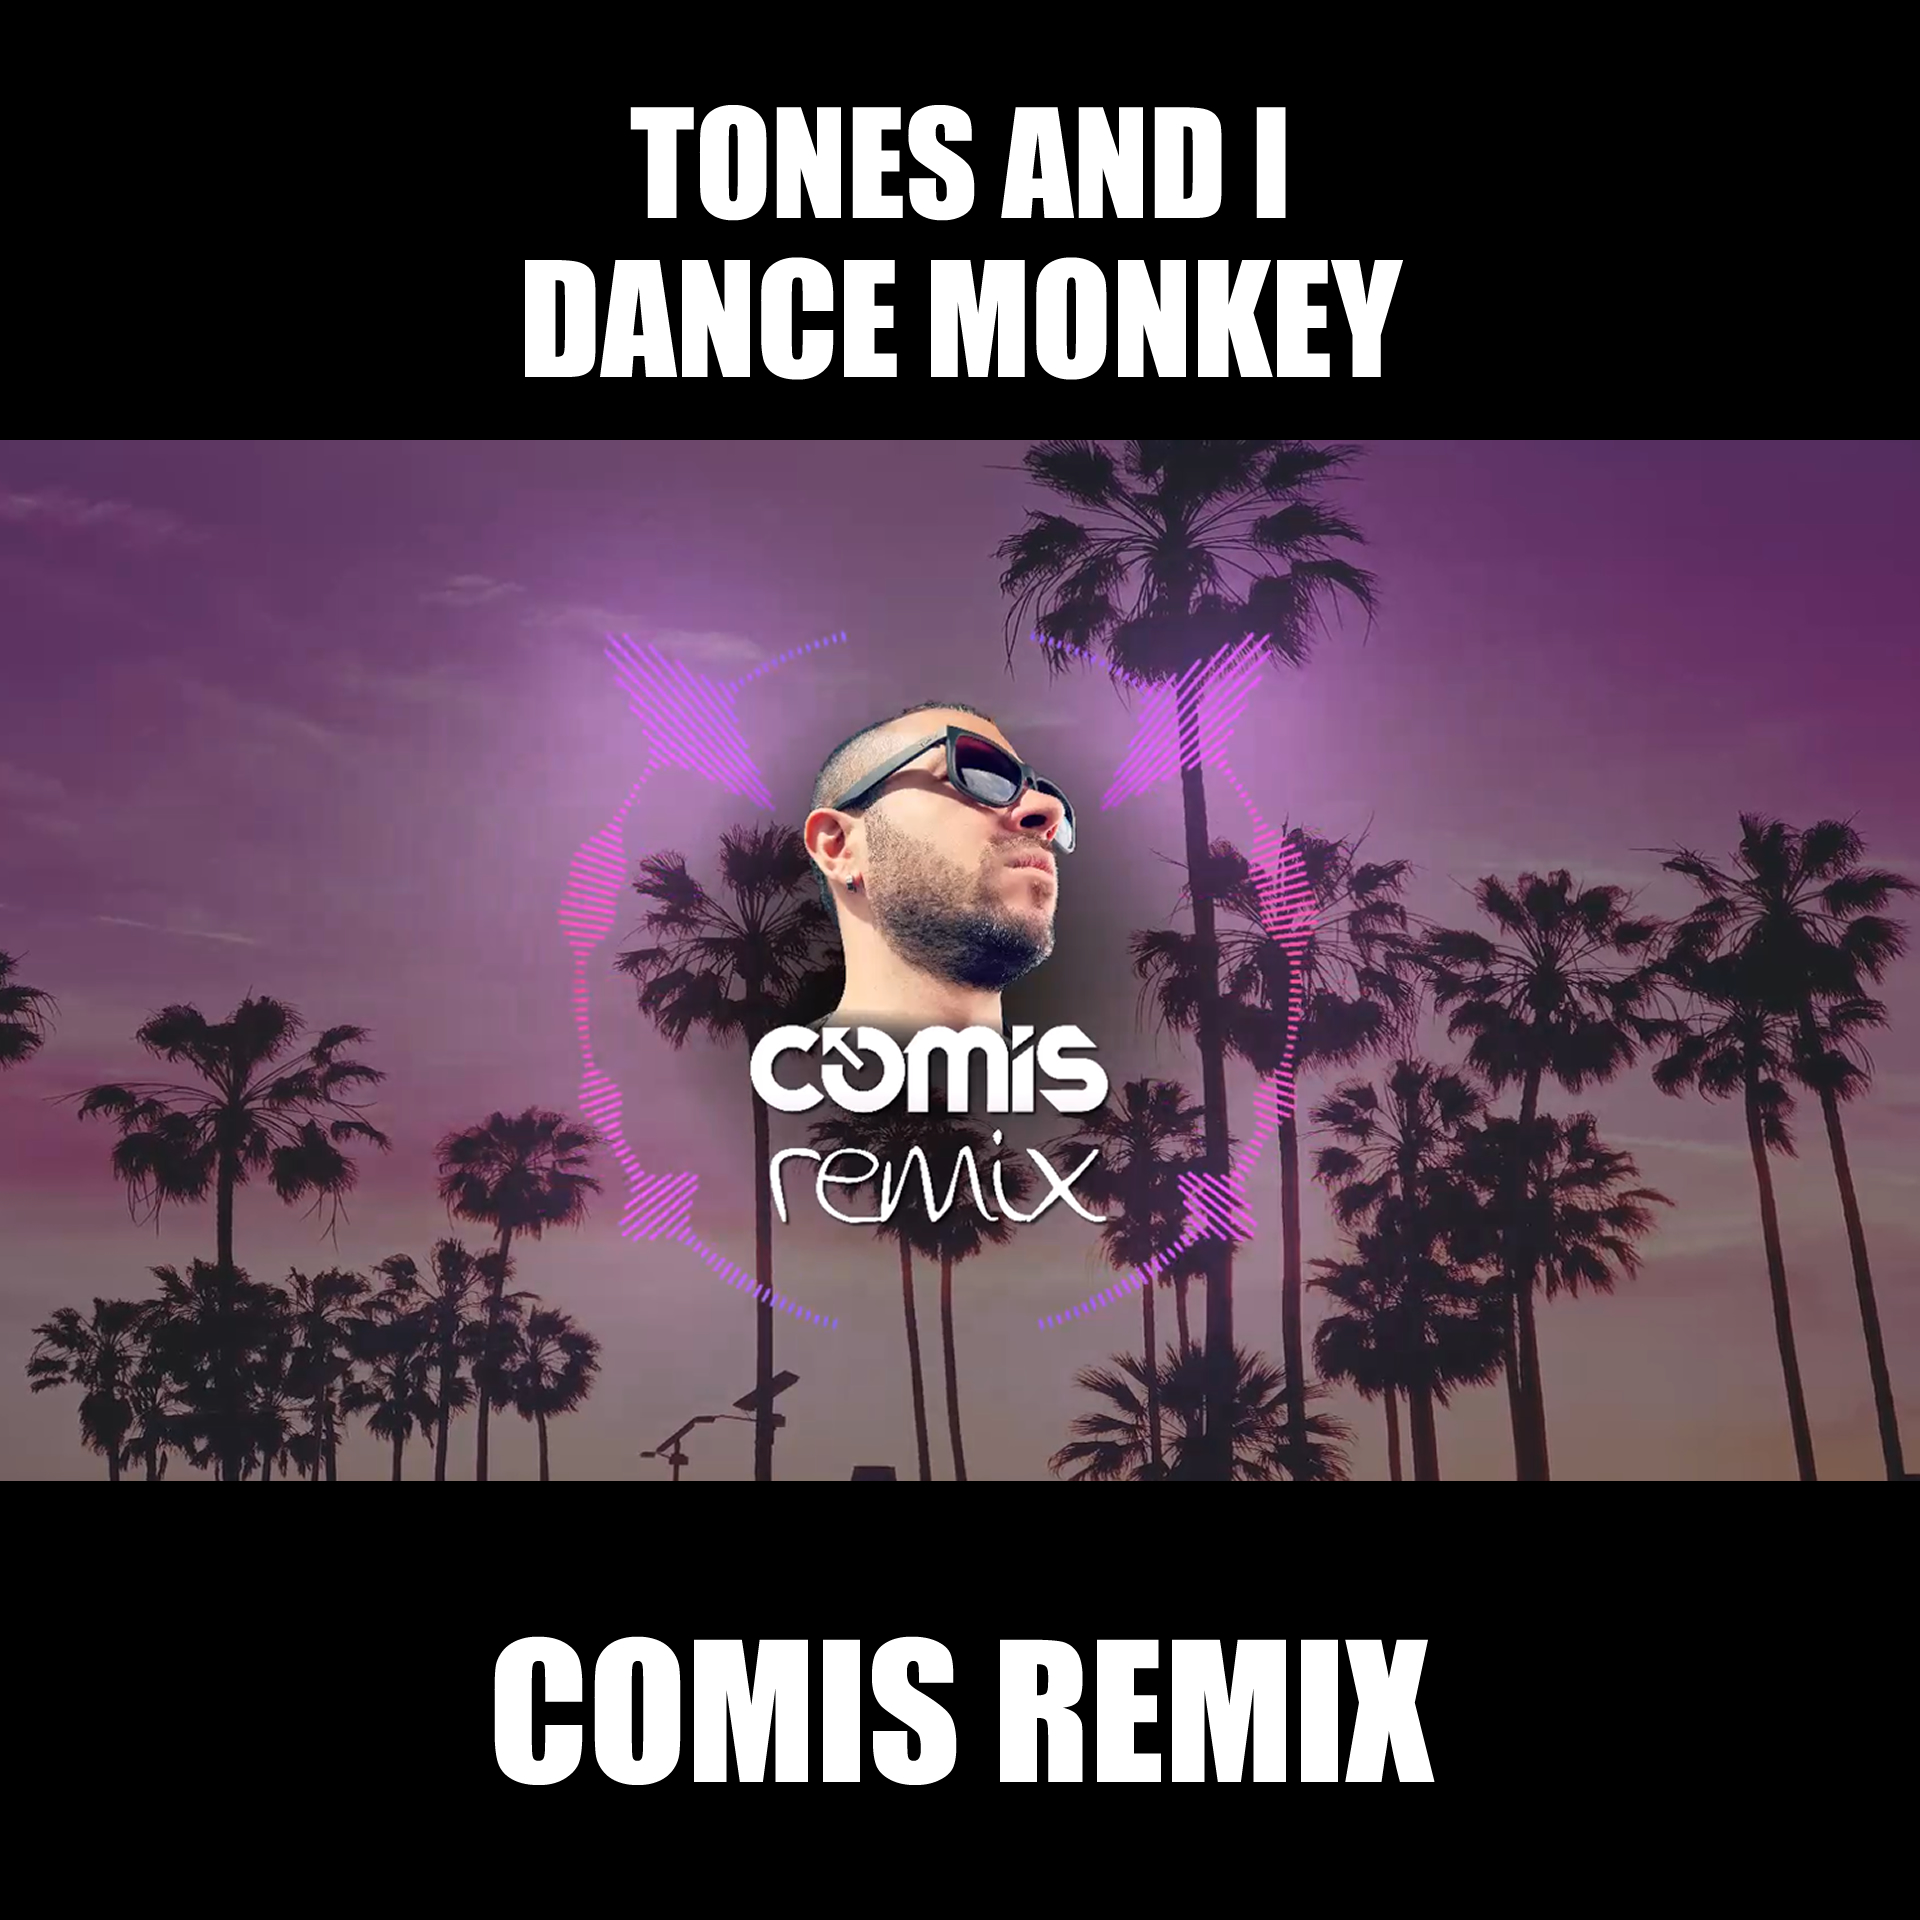 Dance Monkey Tones and i. Тони Уотсон певица дэнс манки. Видеоурок песня дэнс манки. I can dance chimp